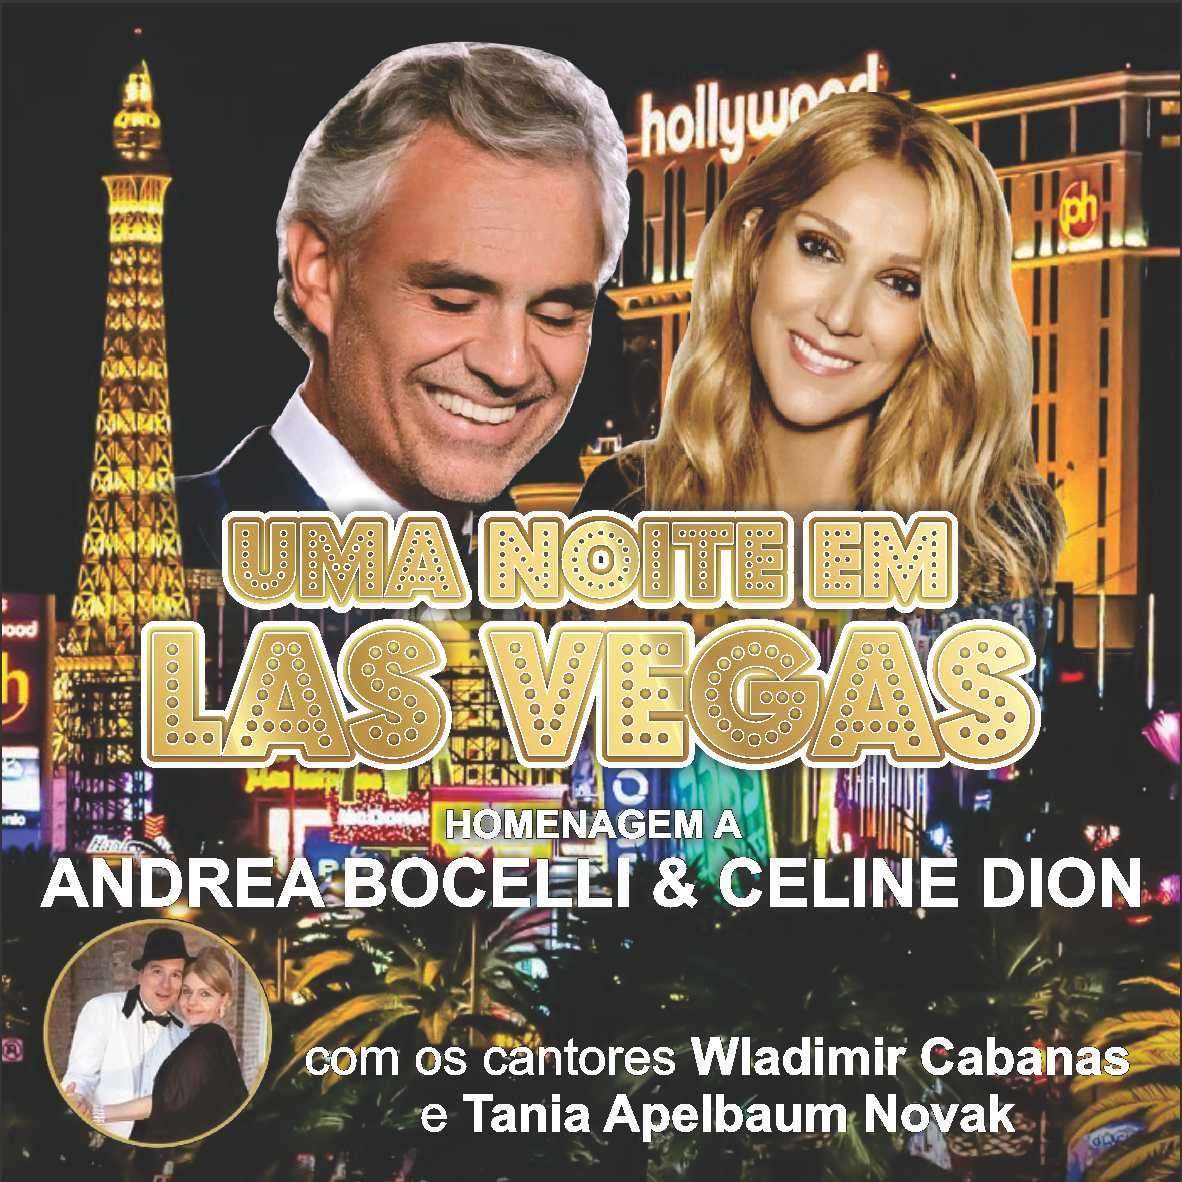 Homenagem a Andrea Boccelli e Celine Dion